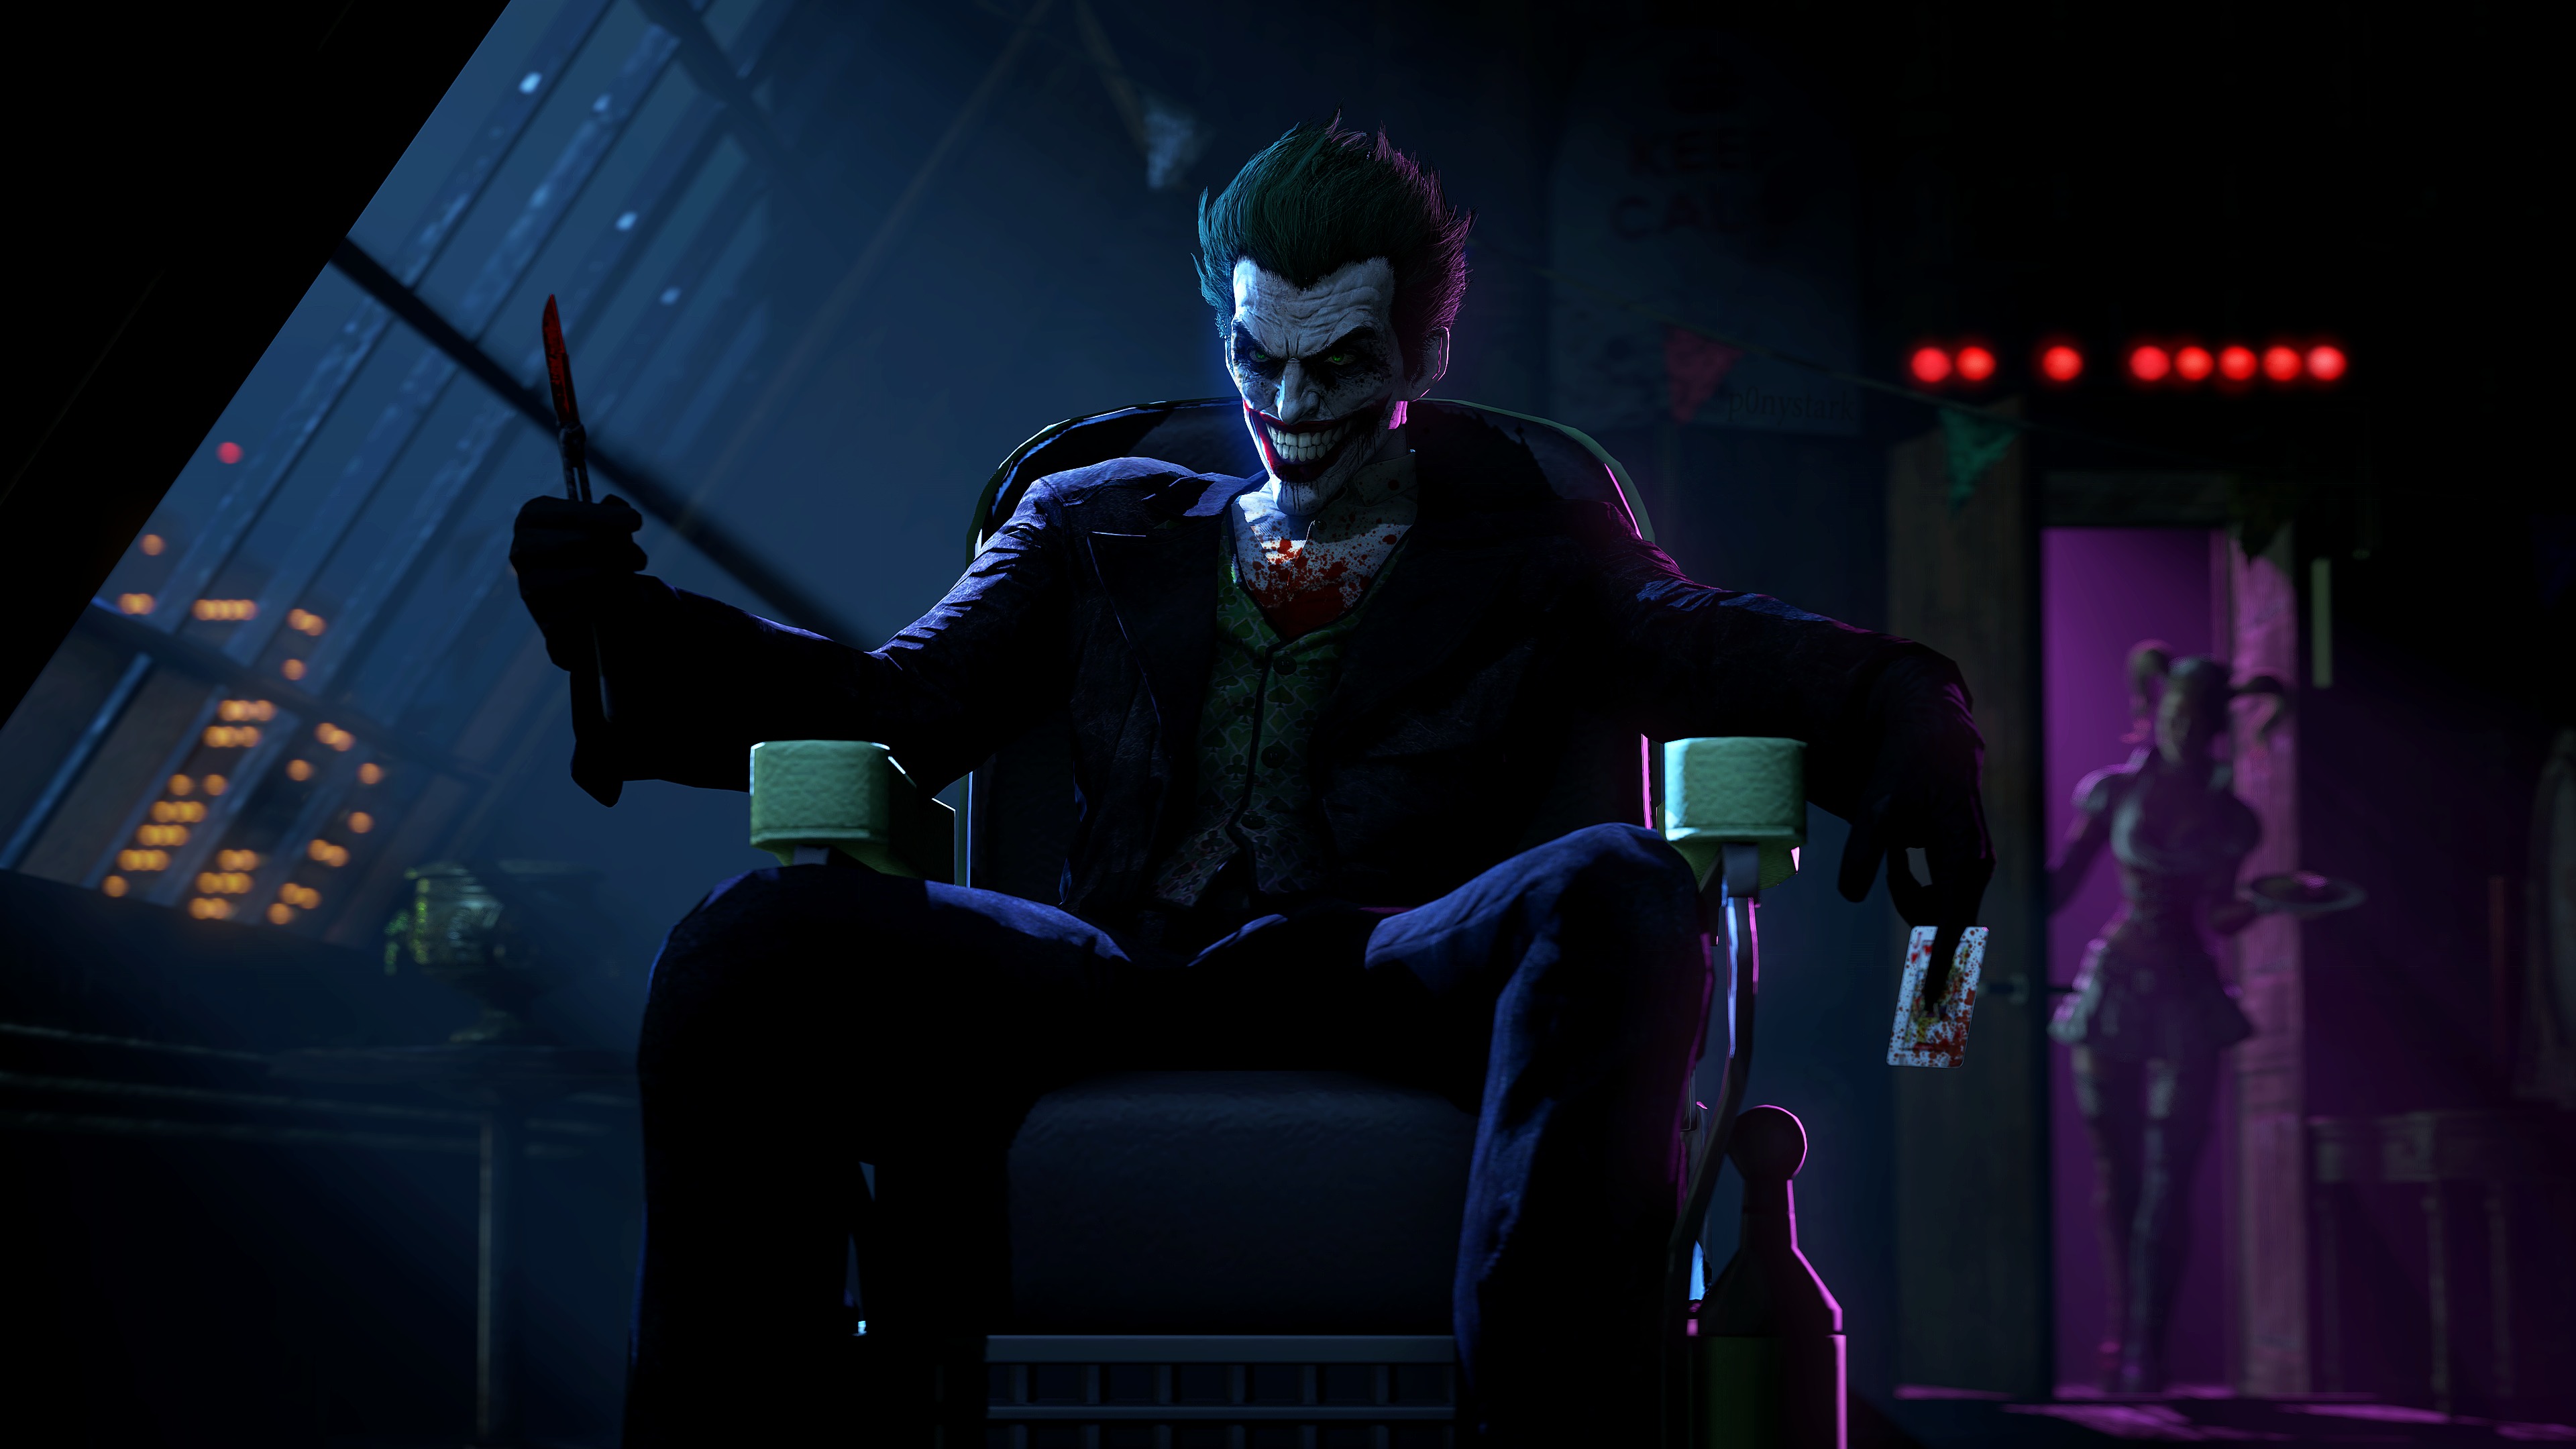 joker, batman: arkham origins, video game, batman images